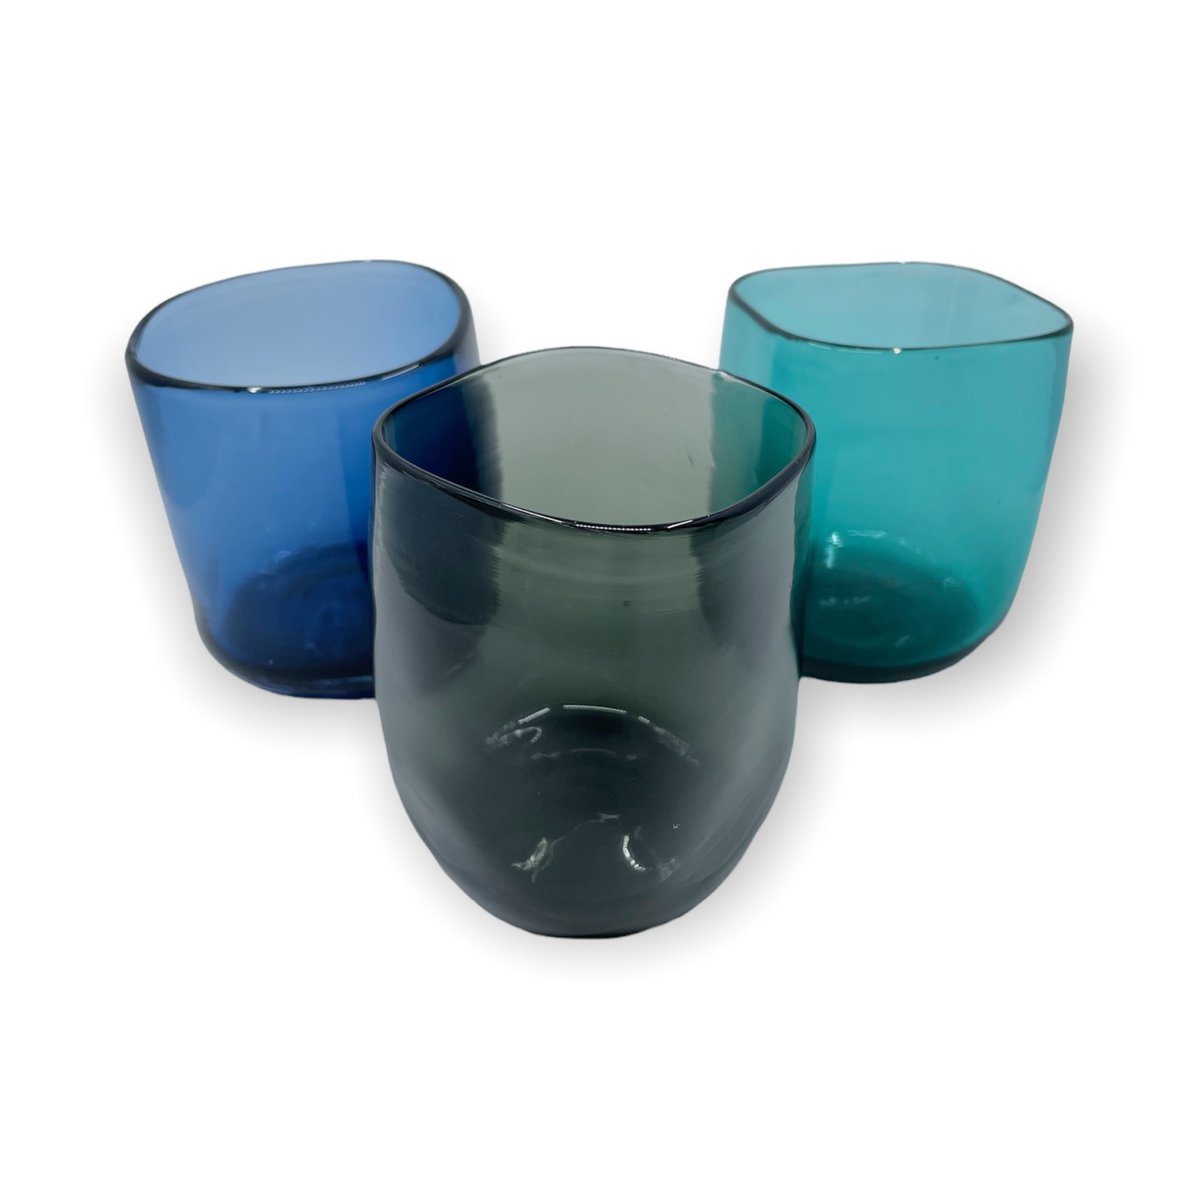 Glass cups by Gary Bodker